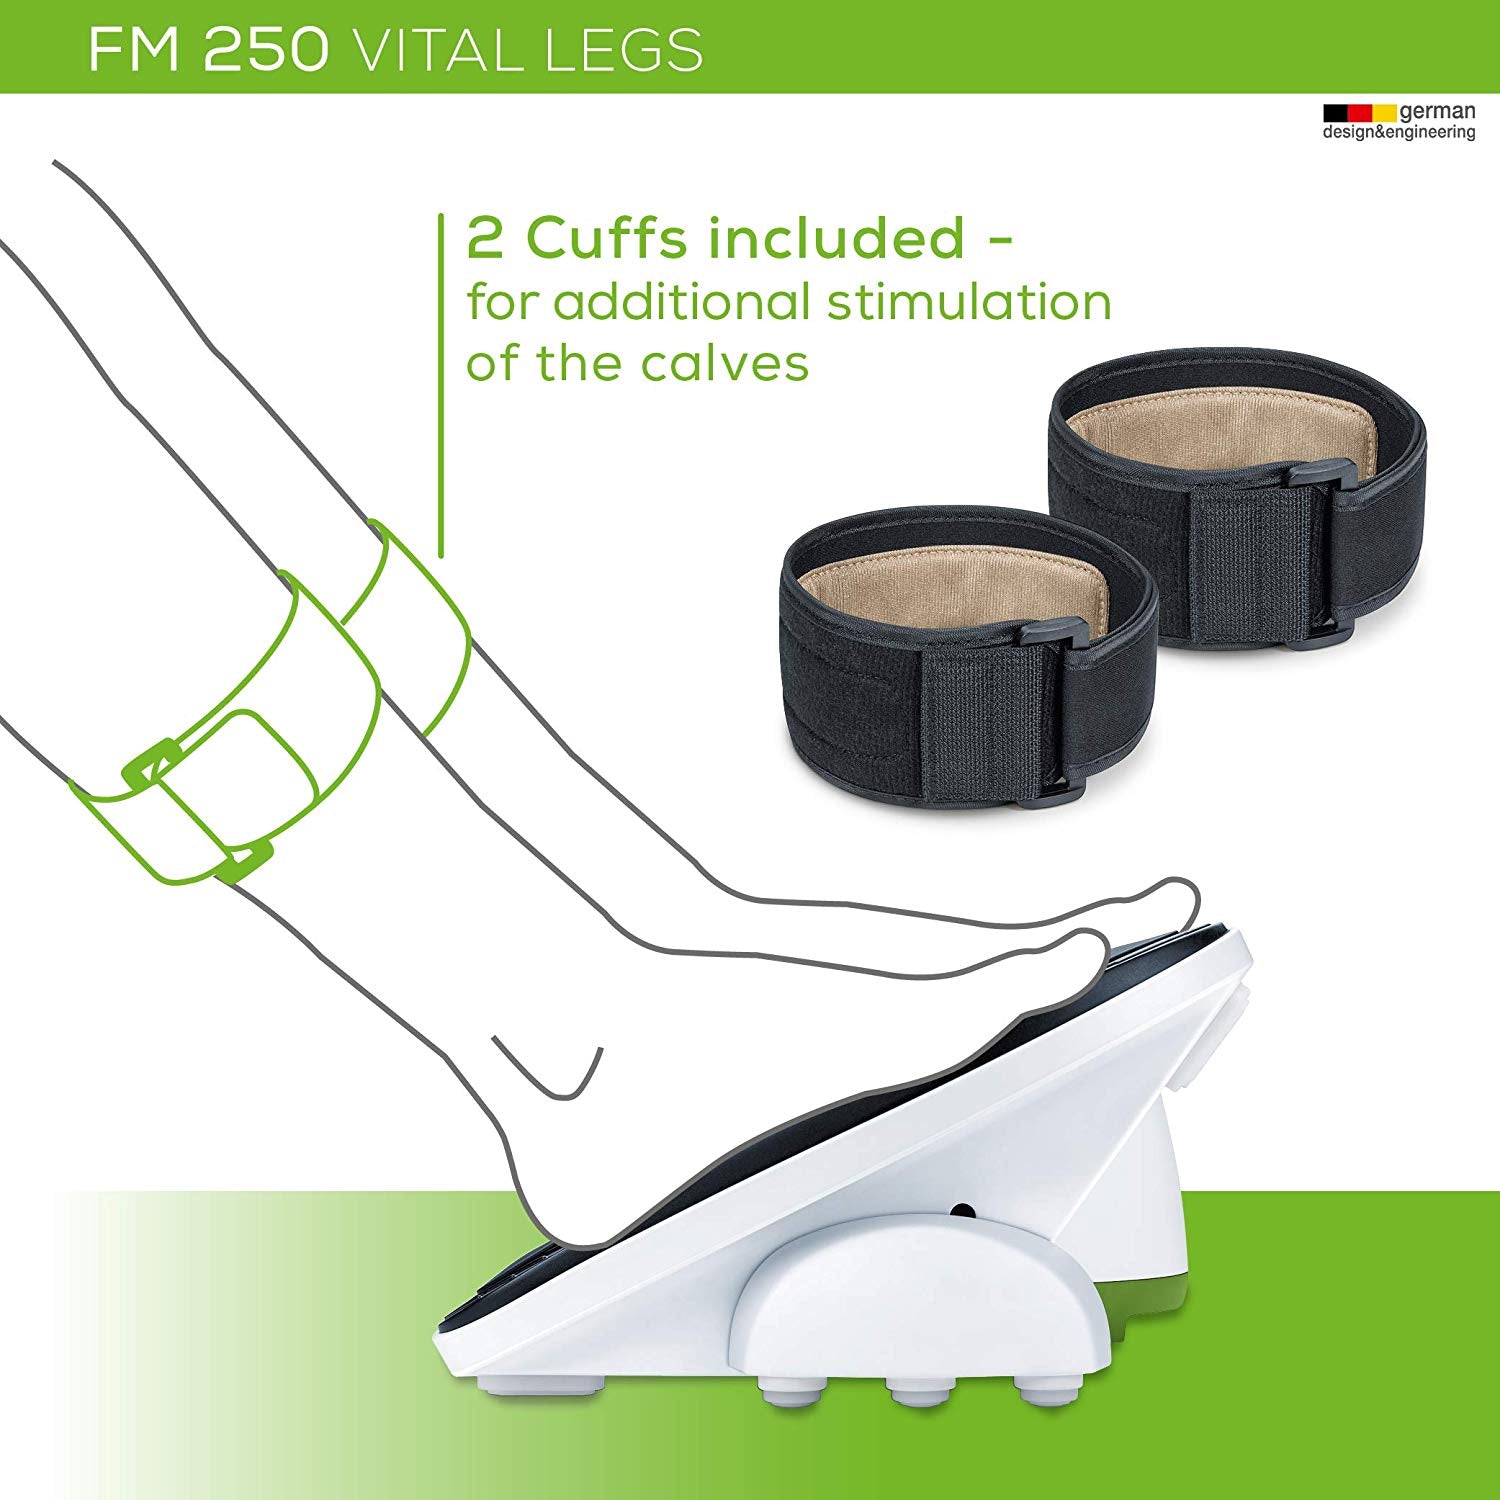 Beurer Vital Legs EMS Circulation Stimulator, FM250 2 cuffs included Beurer Vital Legs EMS Circulation Stimulator FM250 6 electrodes 25% off Revitive Circulation Booster